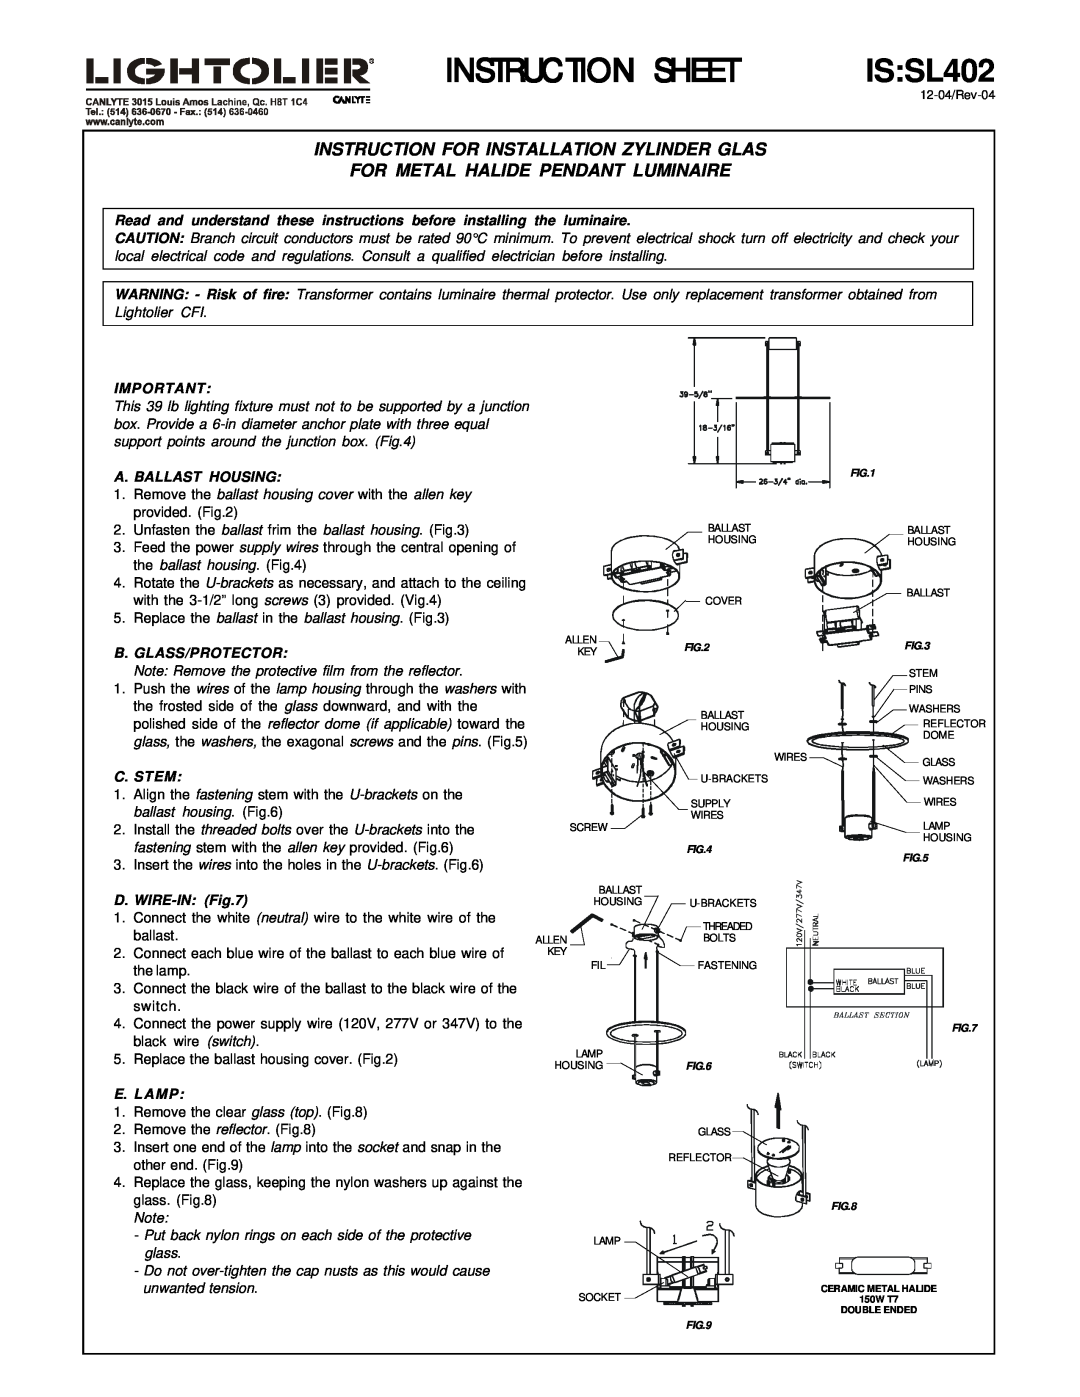 Lightolier IS:SL402 instruction sheet Instruction Sheet, IS SL402, Instruction For Installation Zylinder Glas, C. Stem 